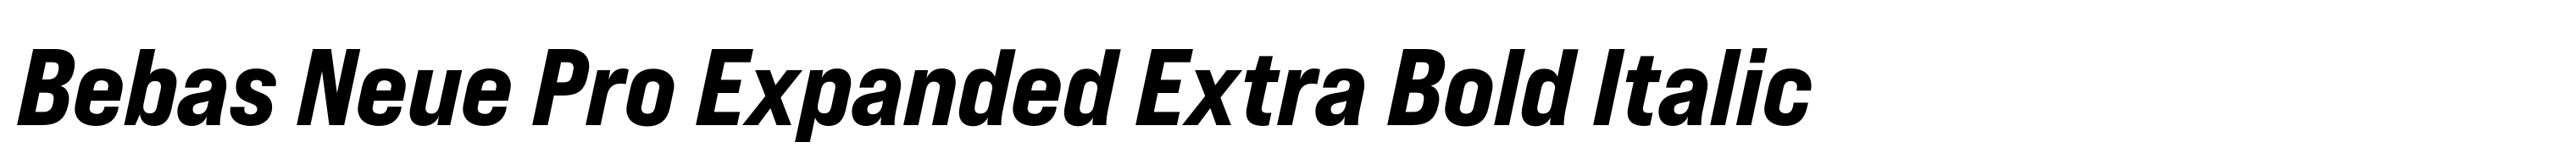 Bebas Neue Pro Expanded Extra Bold Italic